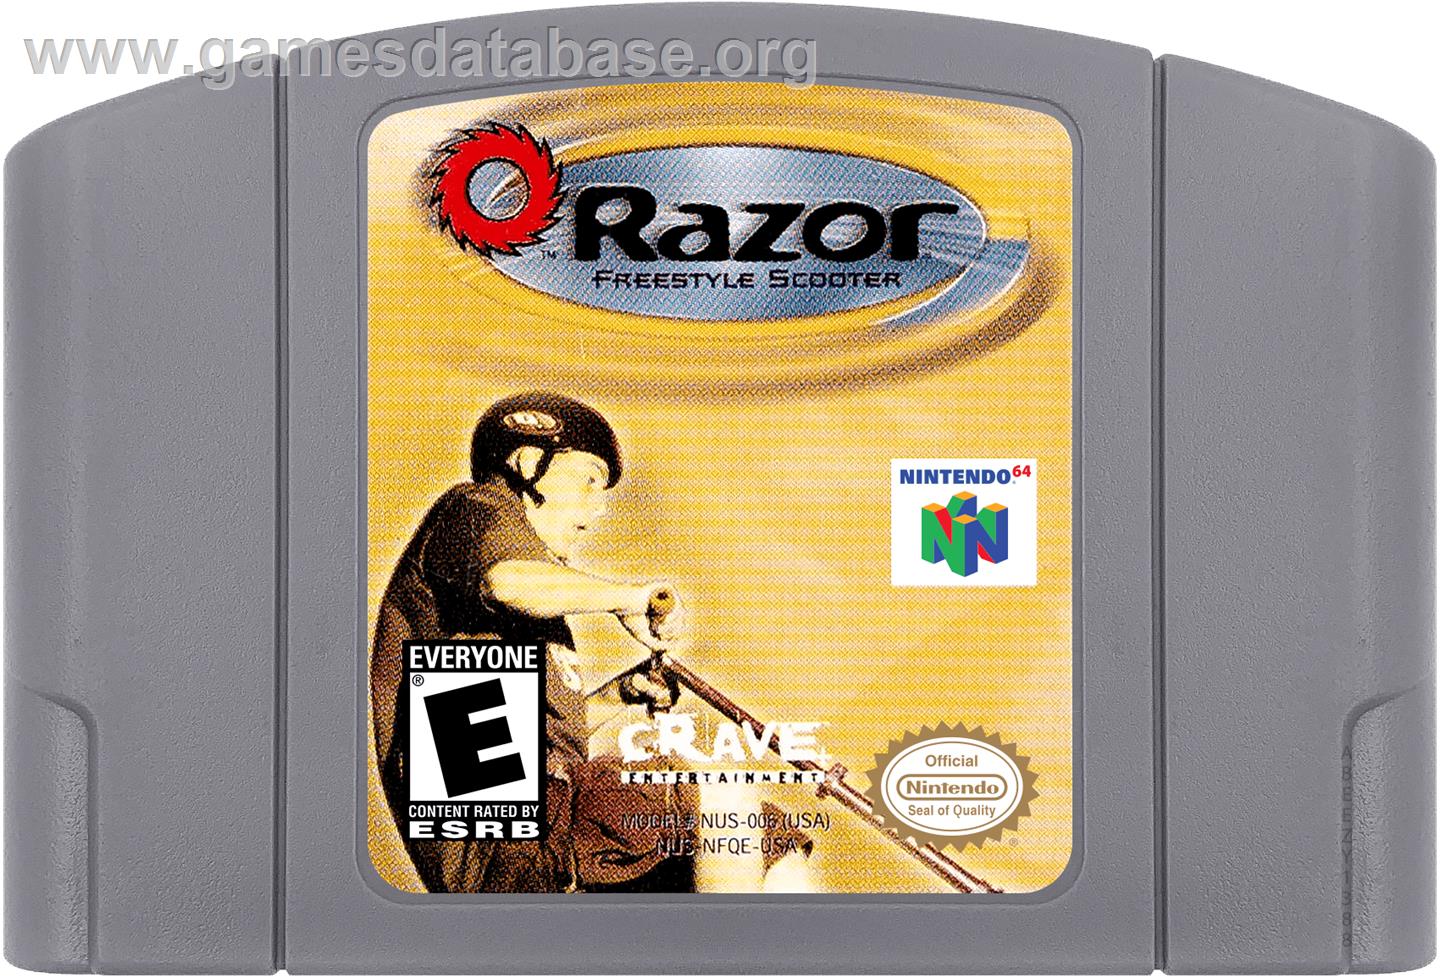 Razor Freestyle Scooter - Nintendo N64 - Artwork - Cartridge